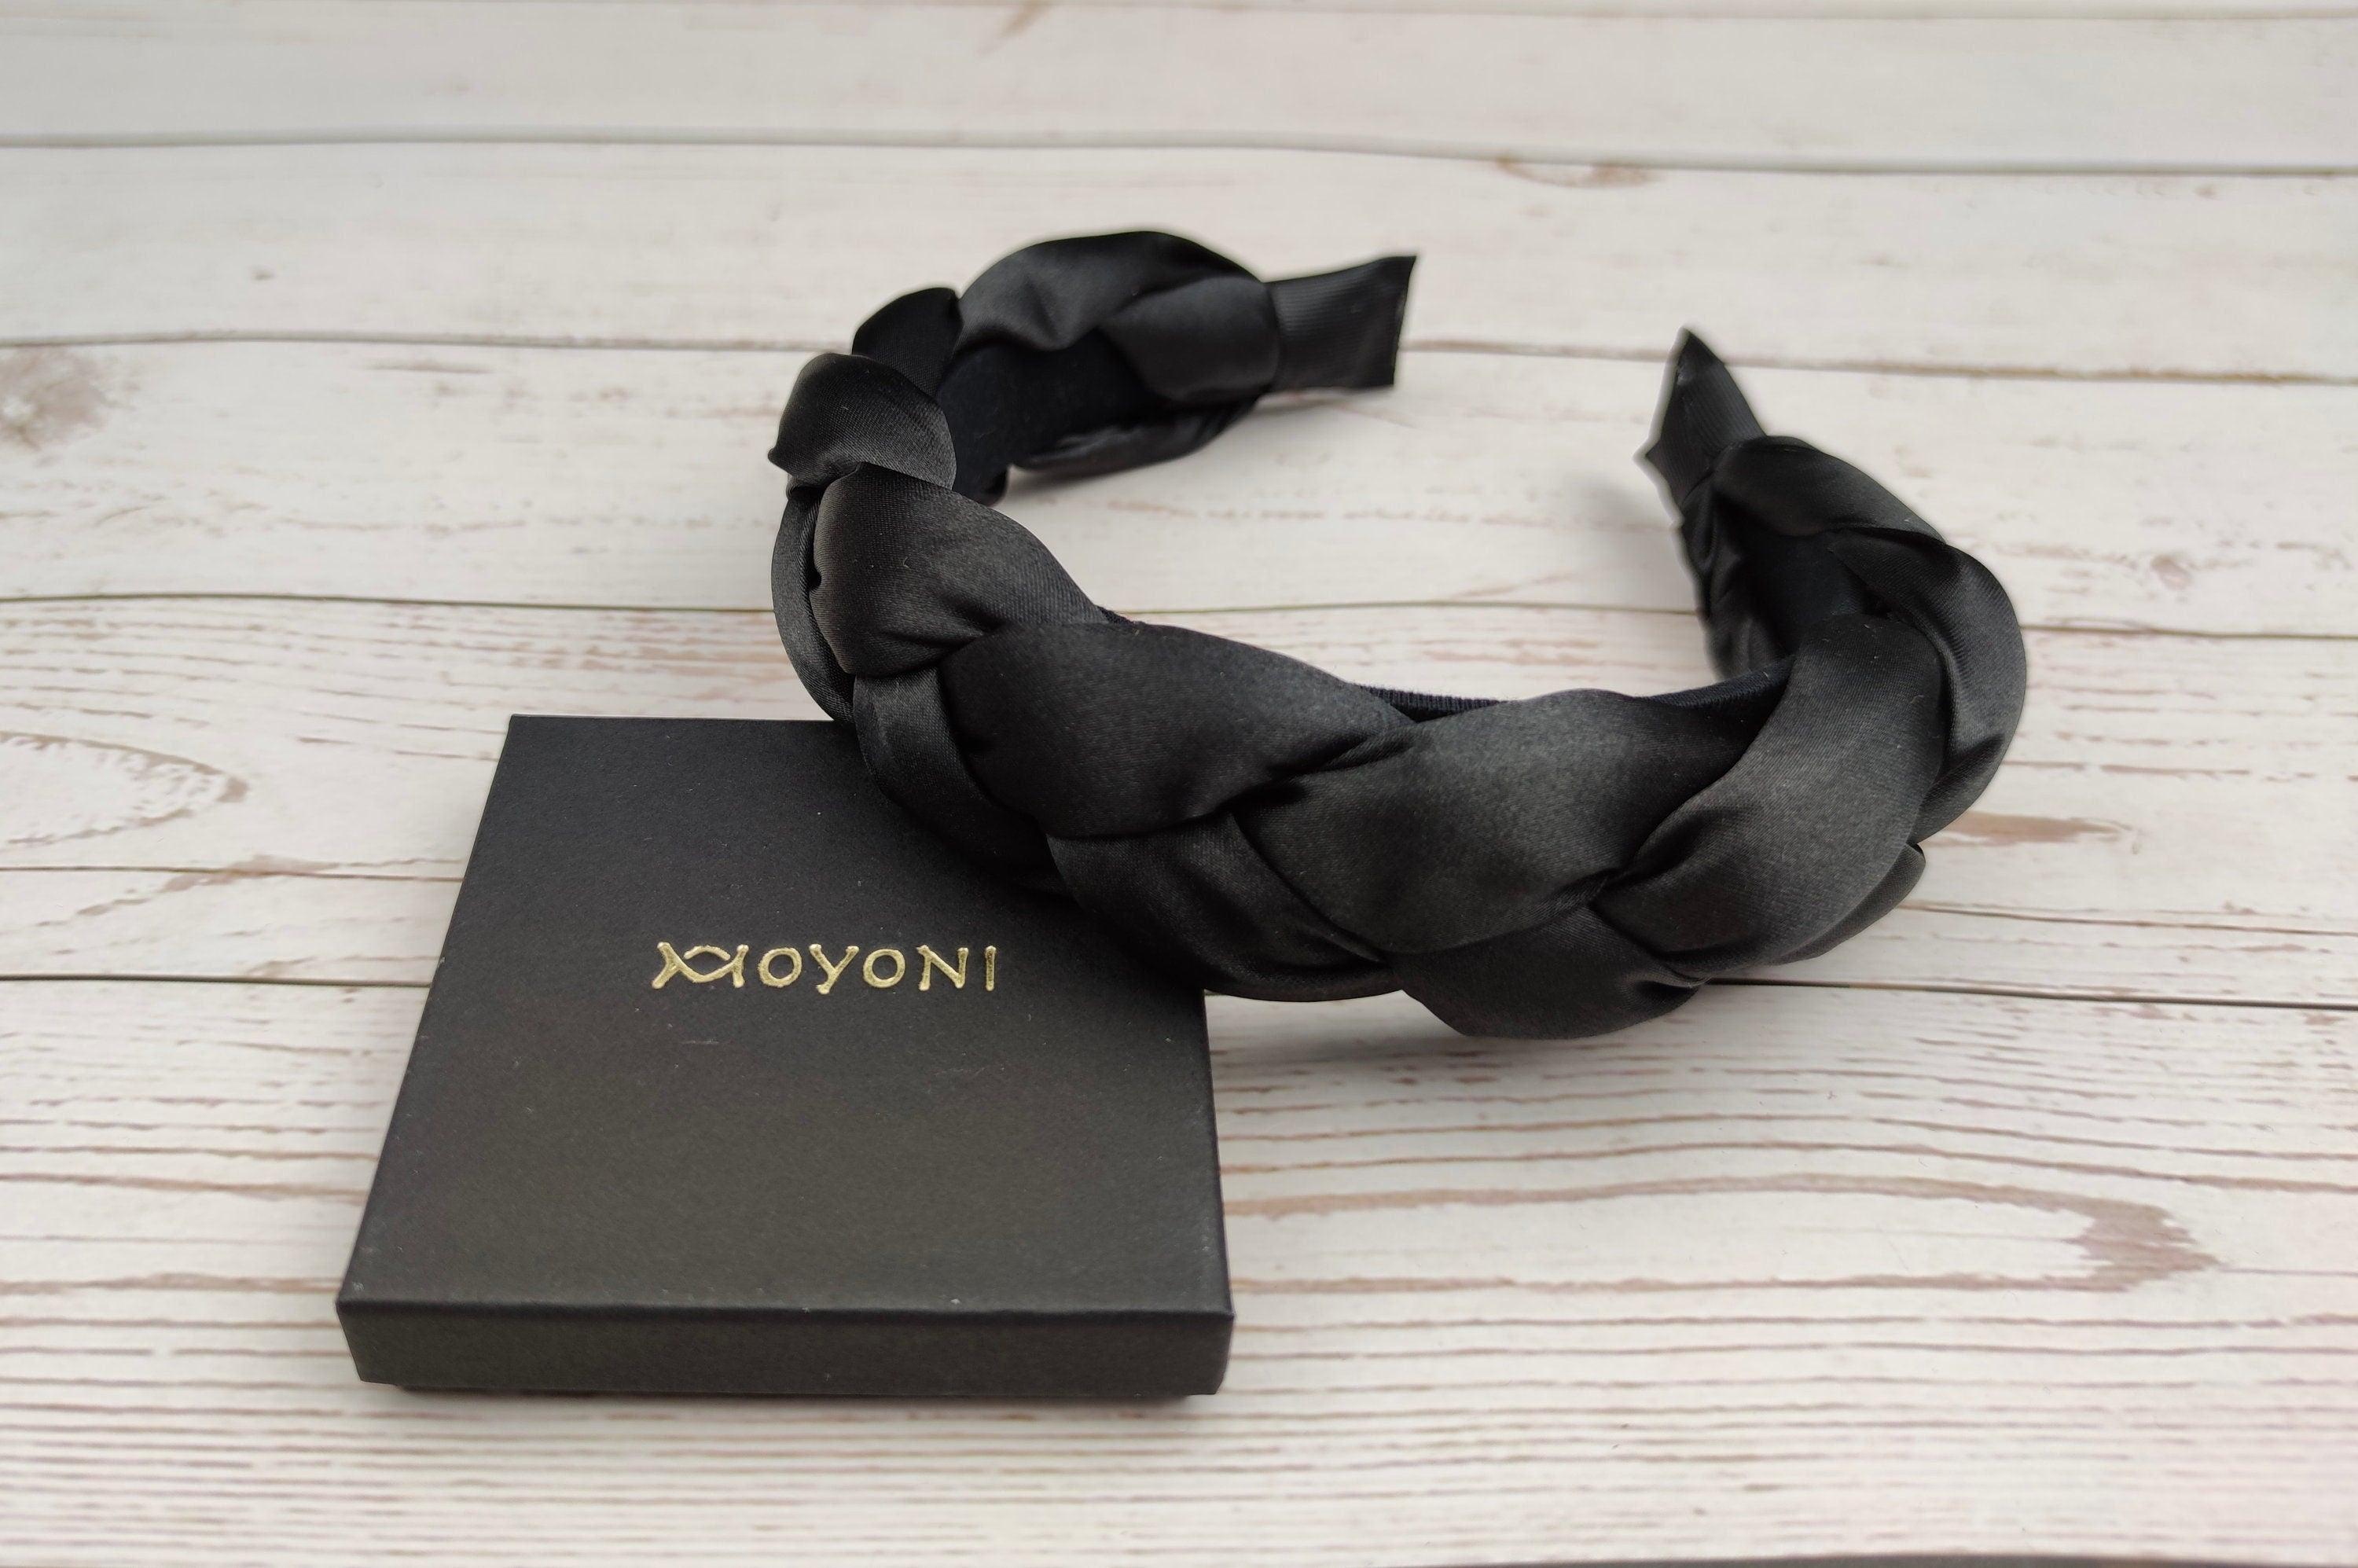 Elegant Black Padded Satin Headband with Braided Design - Fashionable and Stylish Headband for Women and Girl available at Moyoni Design